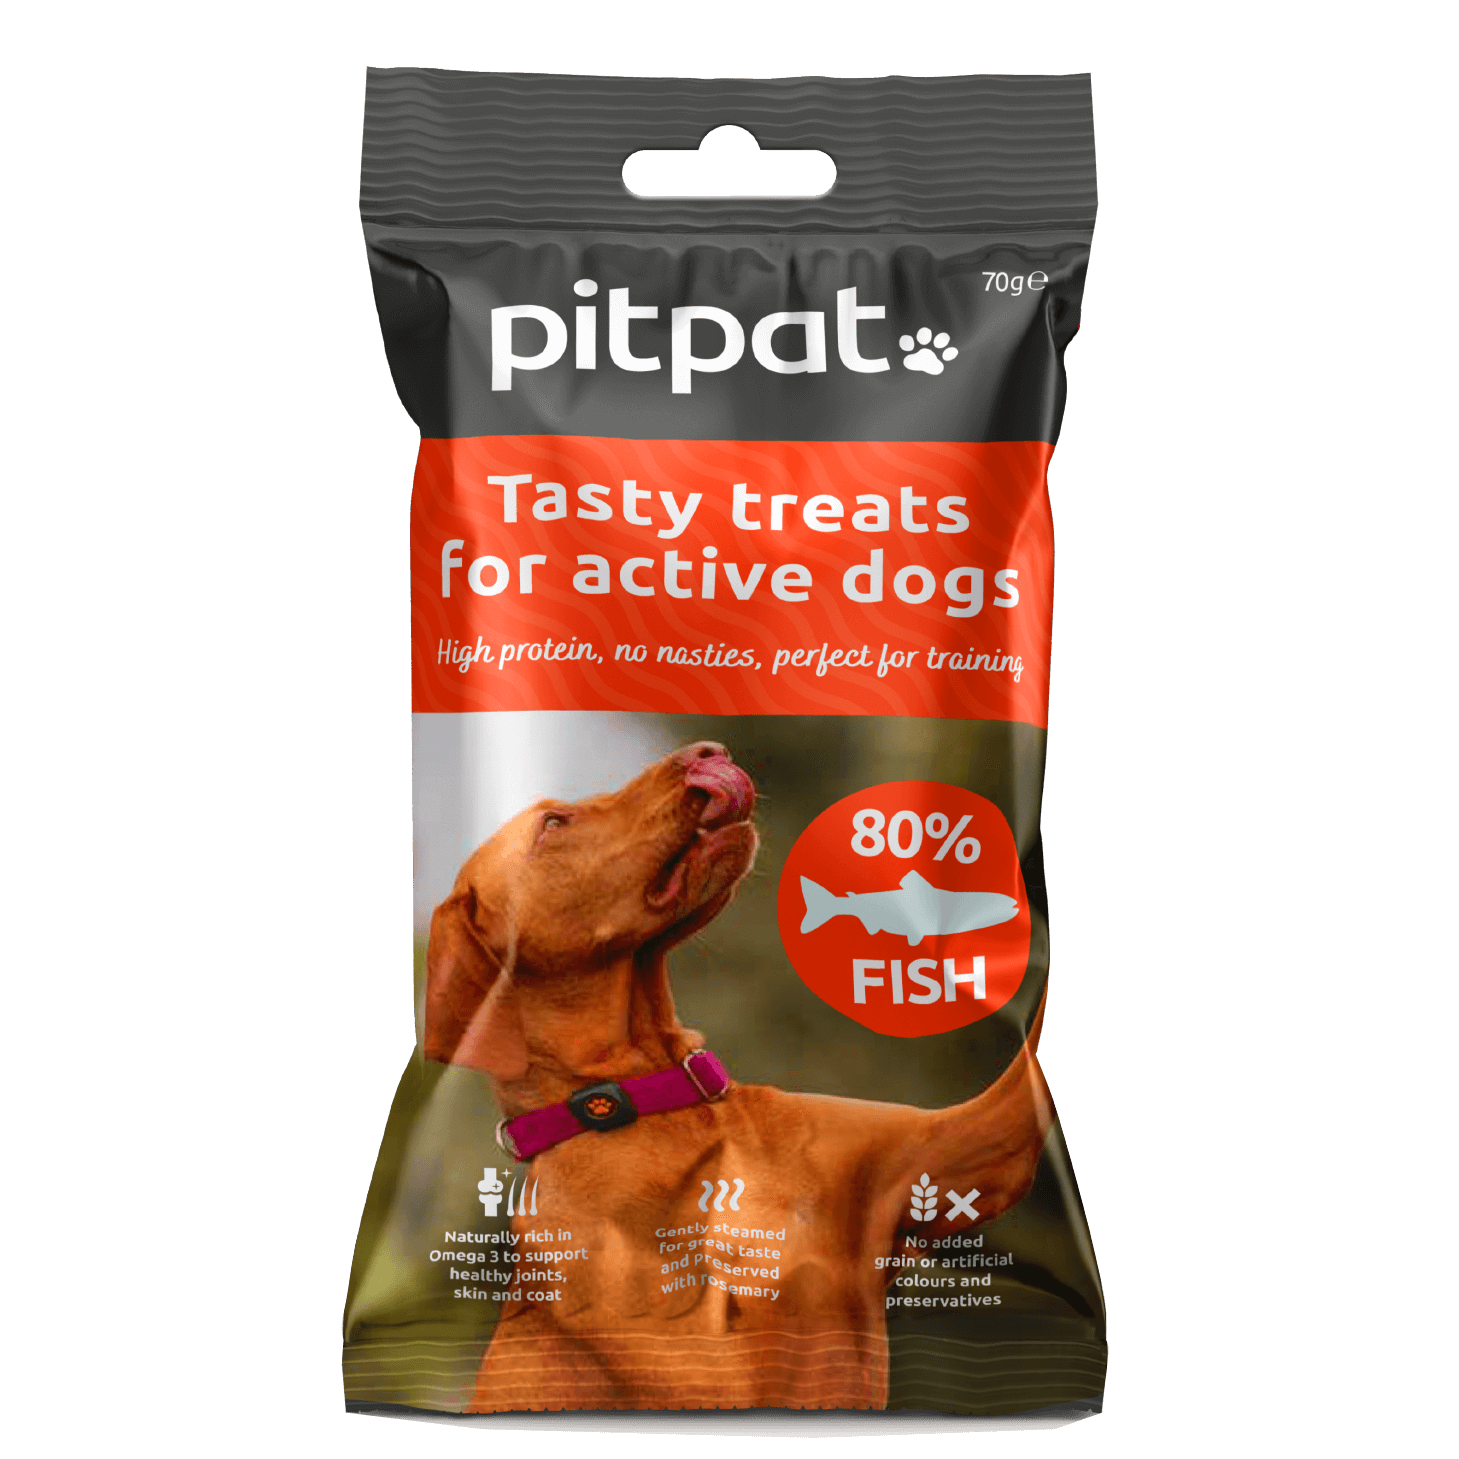 A bag of PitPat training treats